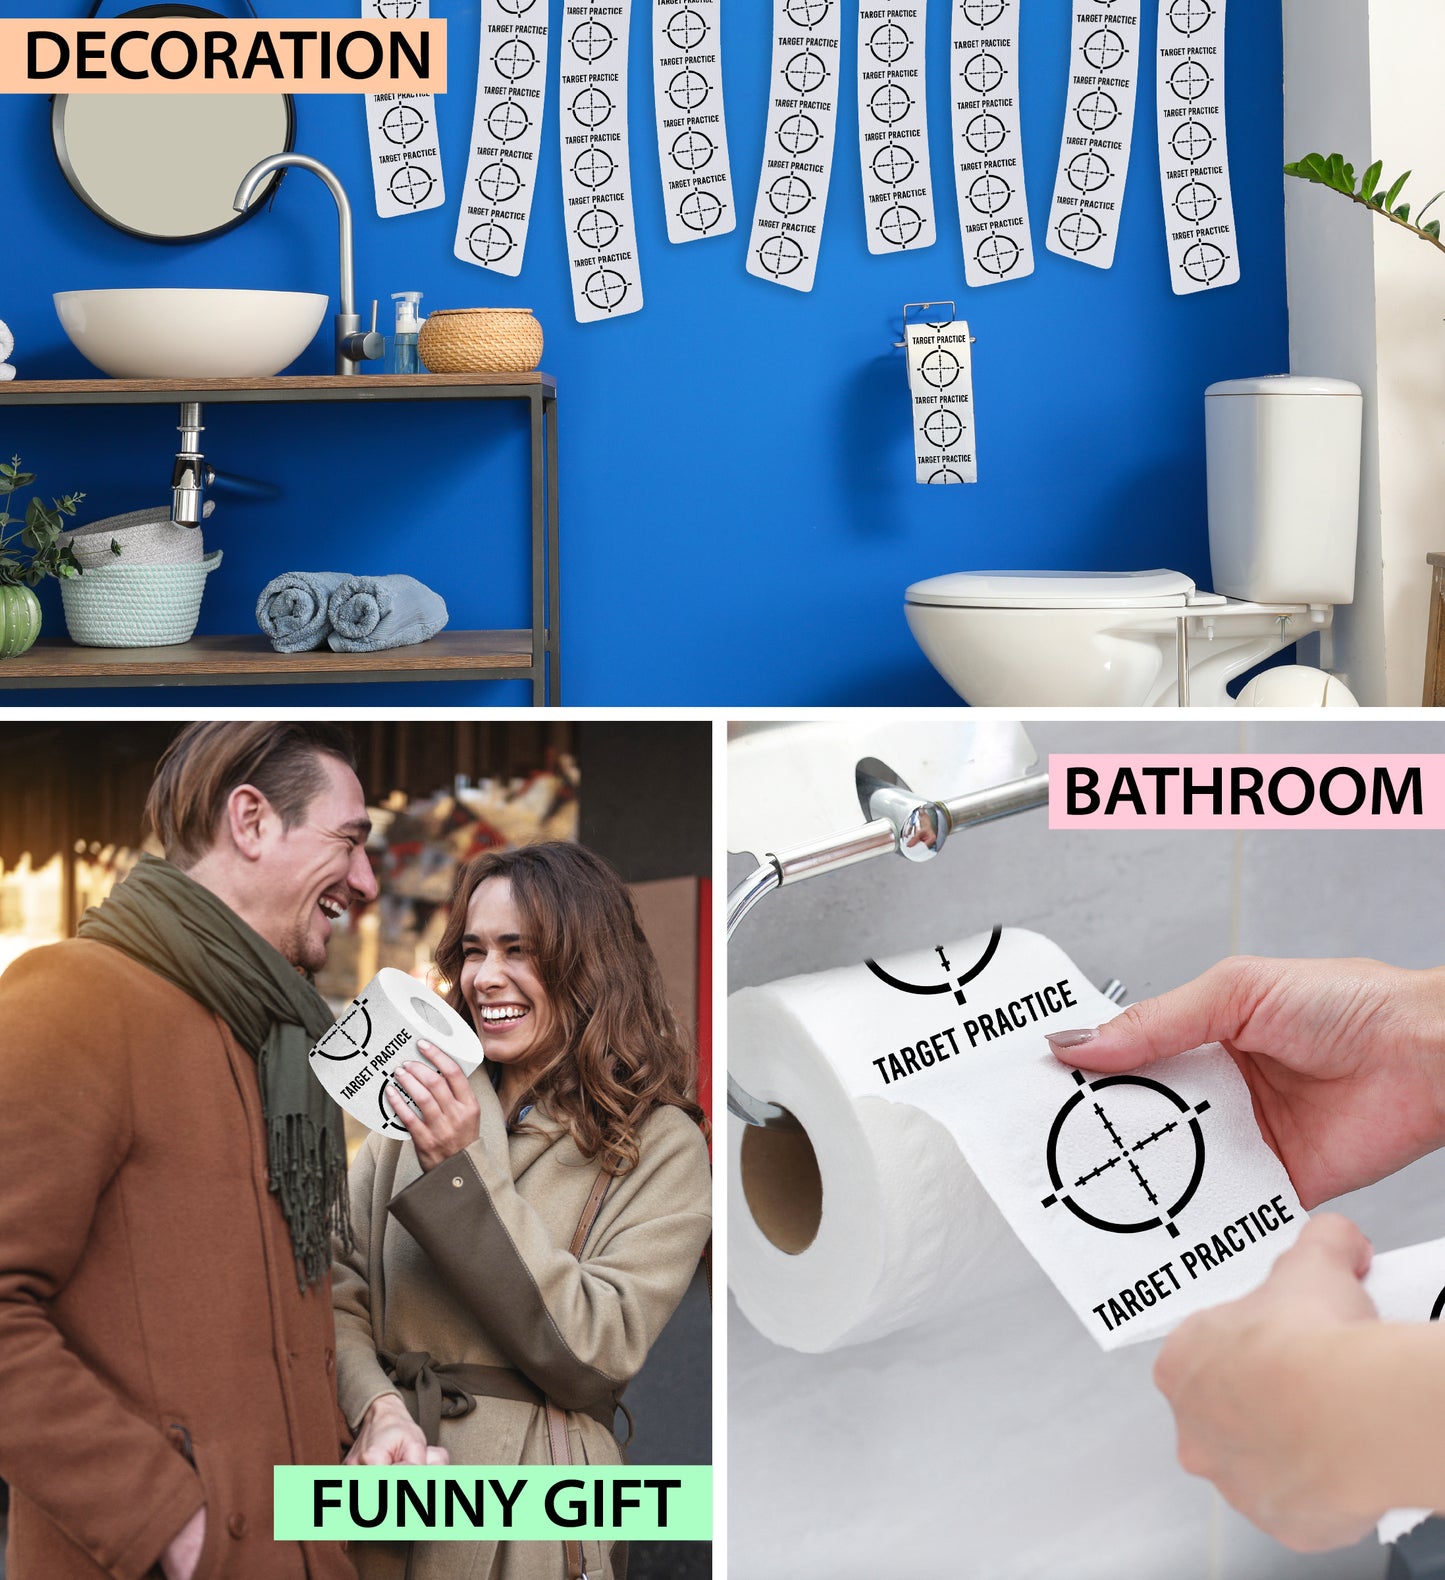 Printed TP Target Practice Funny Novelty Toilet Paper Roll Gag Gift for Pranks